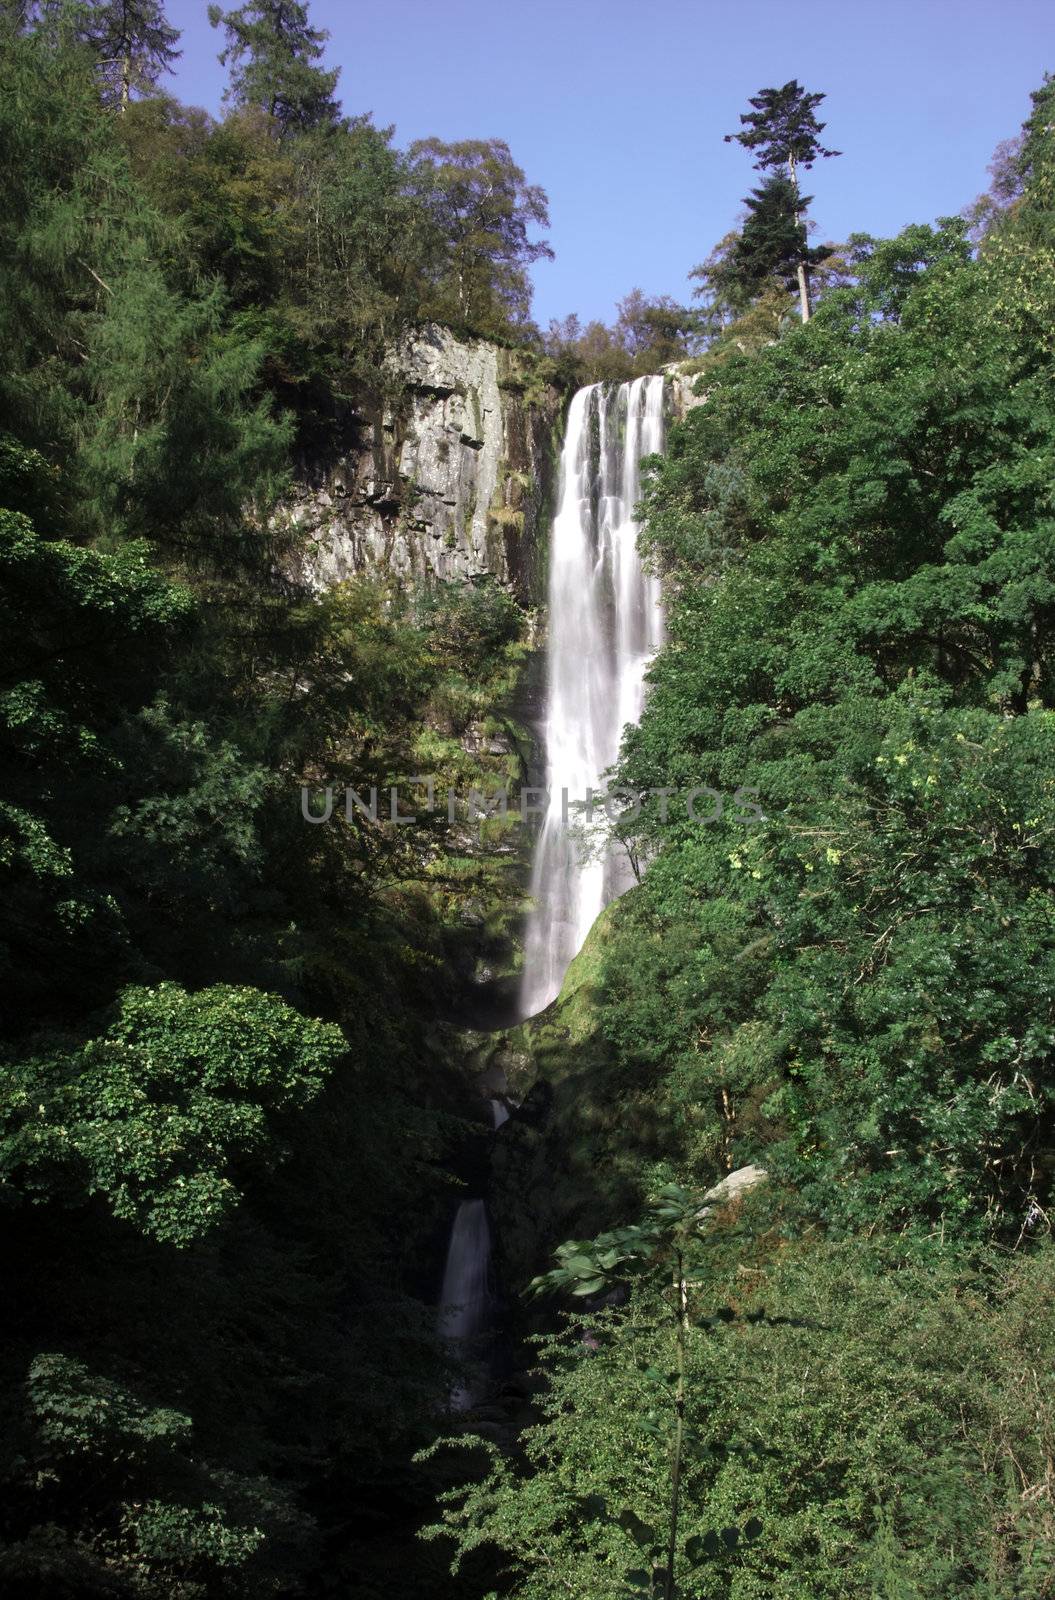 Vertical waterfall in Wales by steheap